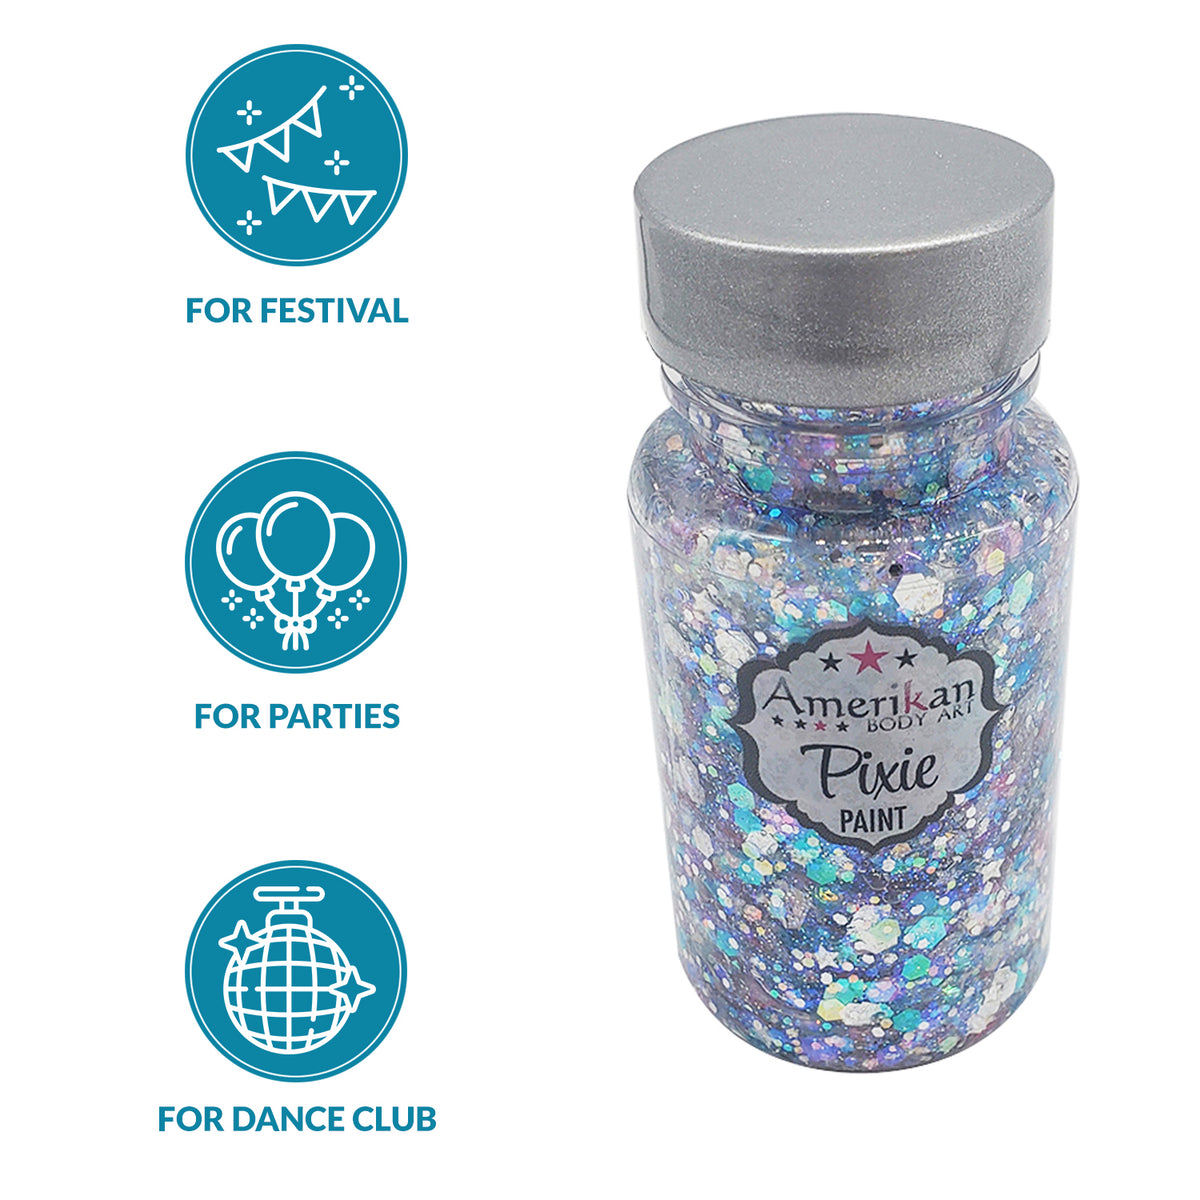 Pixie Paint Glitter Gel - Winter Wonderland - Limited Edition Party Size 1.3 oz